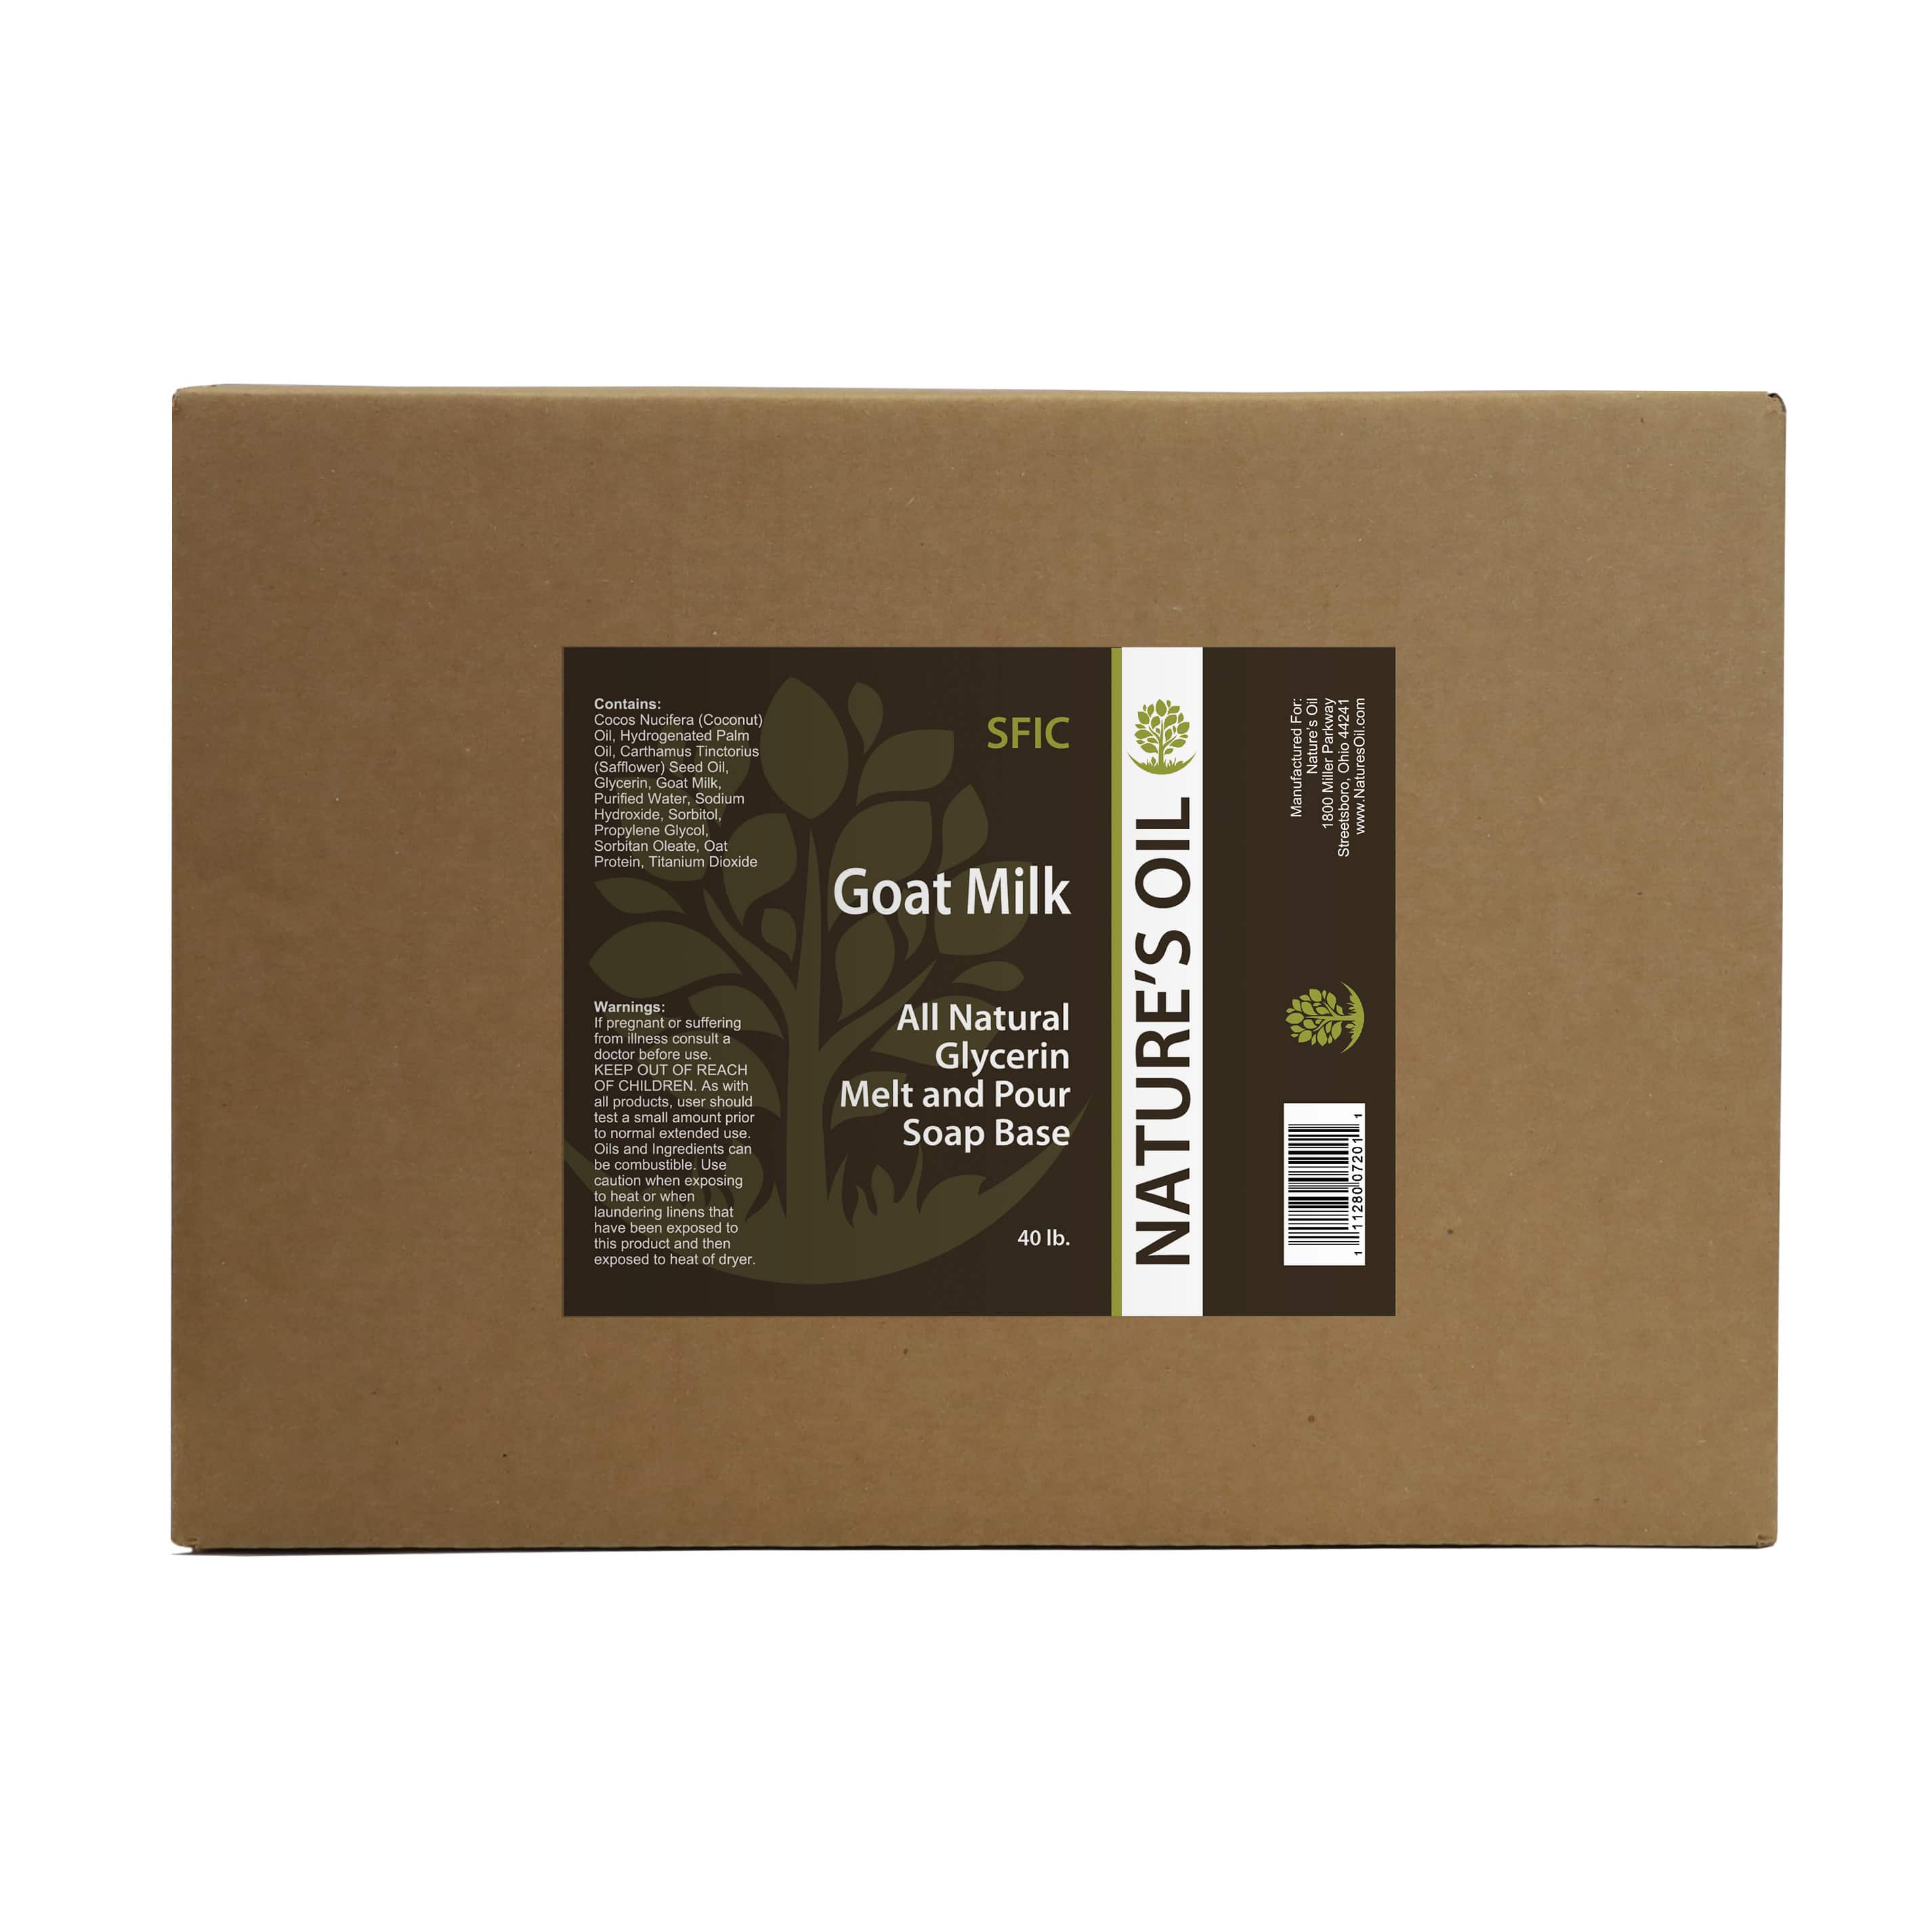 Goats milk glycerin melt & pour soap base organic pure 5 lb buy